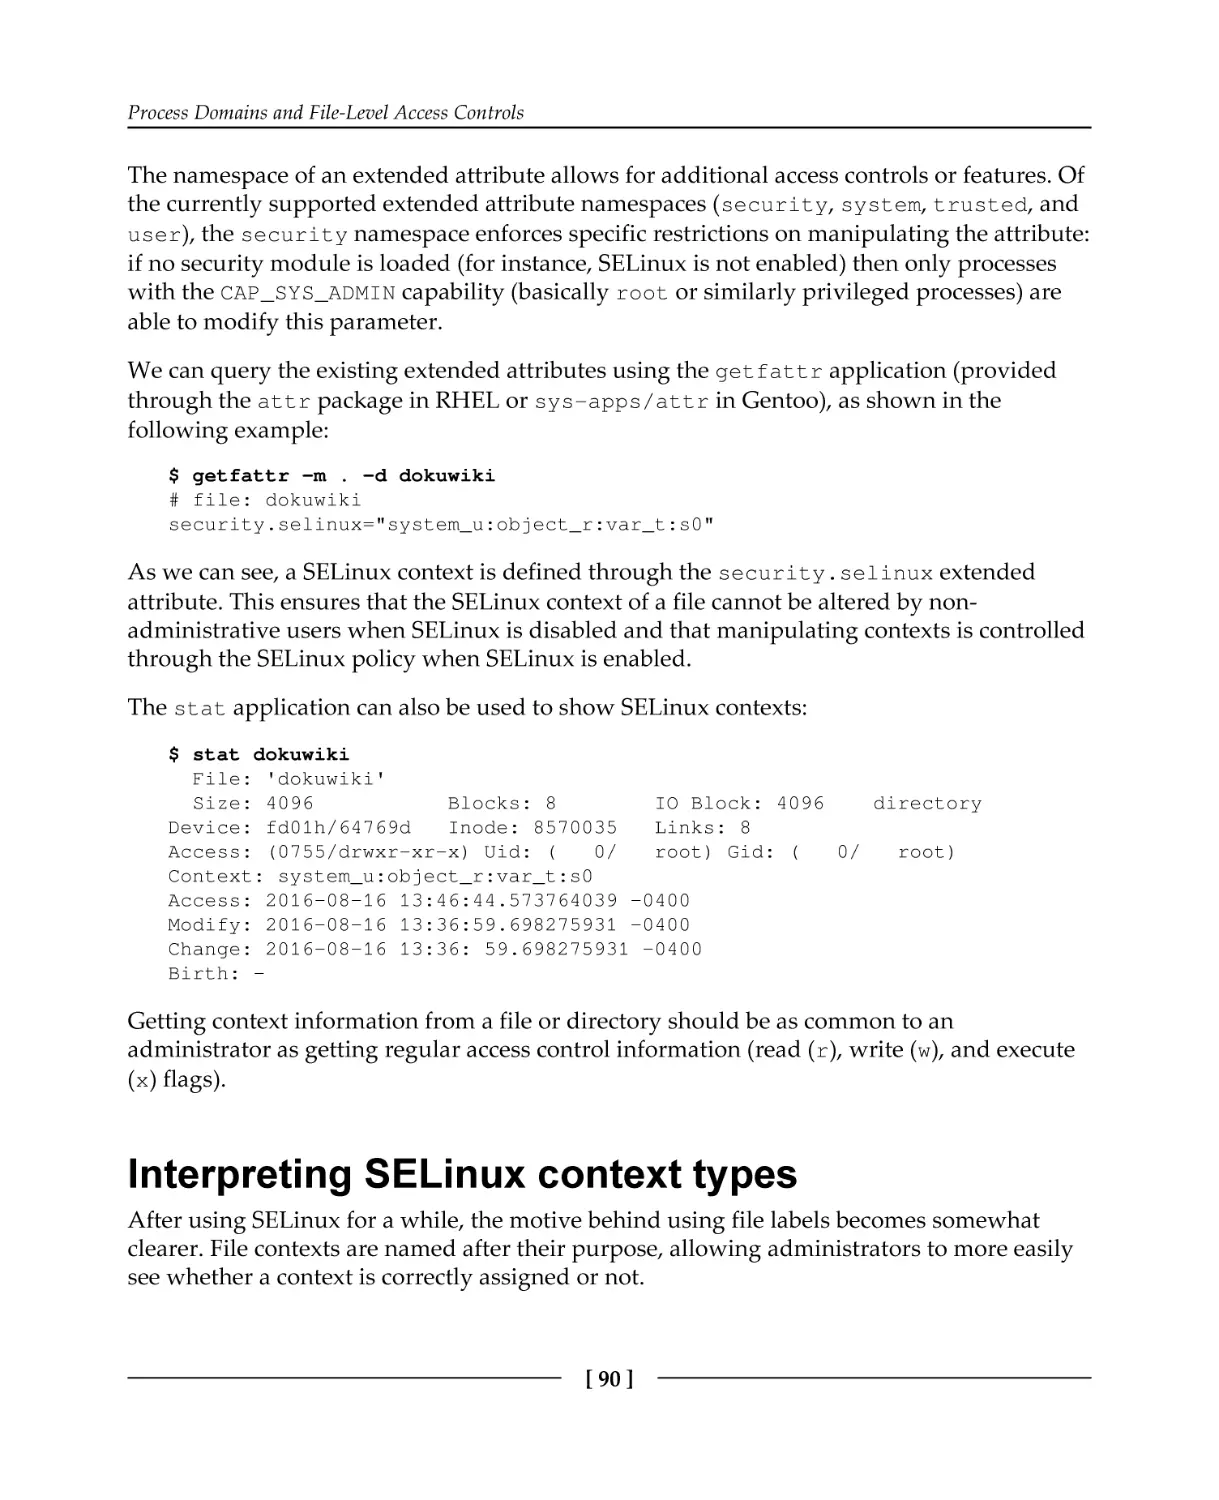 Interpreting SELinux context types